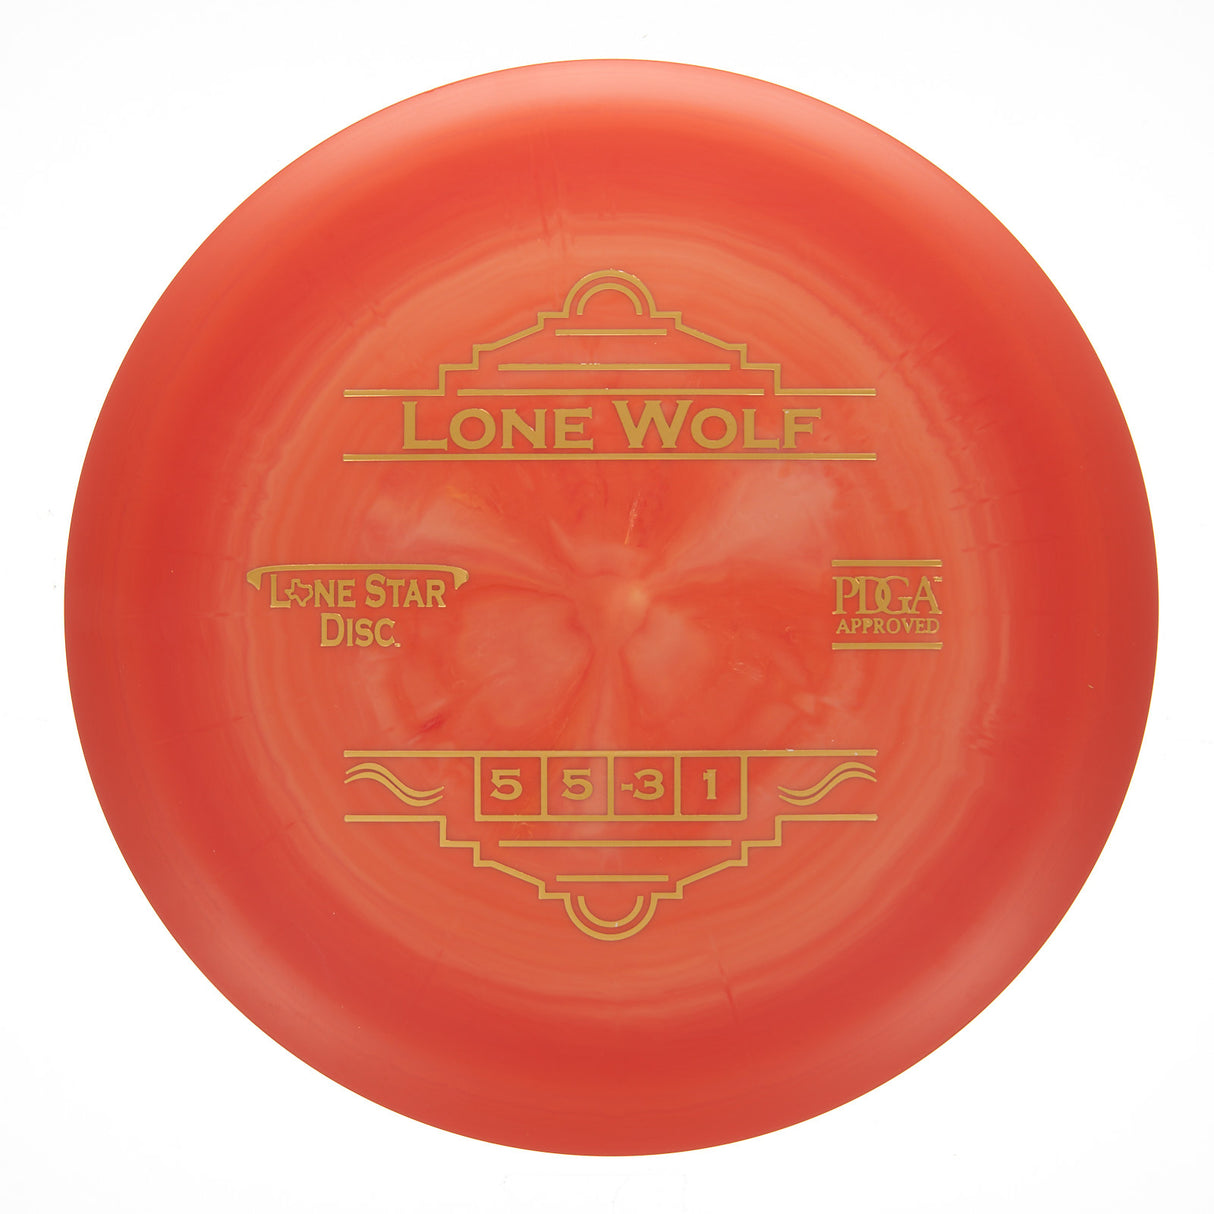 Lone Star Disc Lone Wolf - Alpha 174g | Style 0005